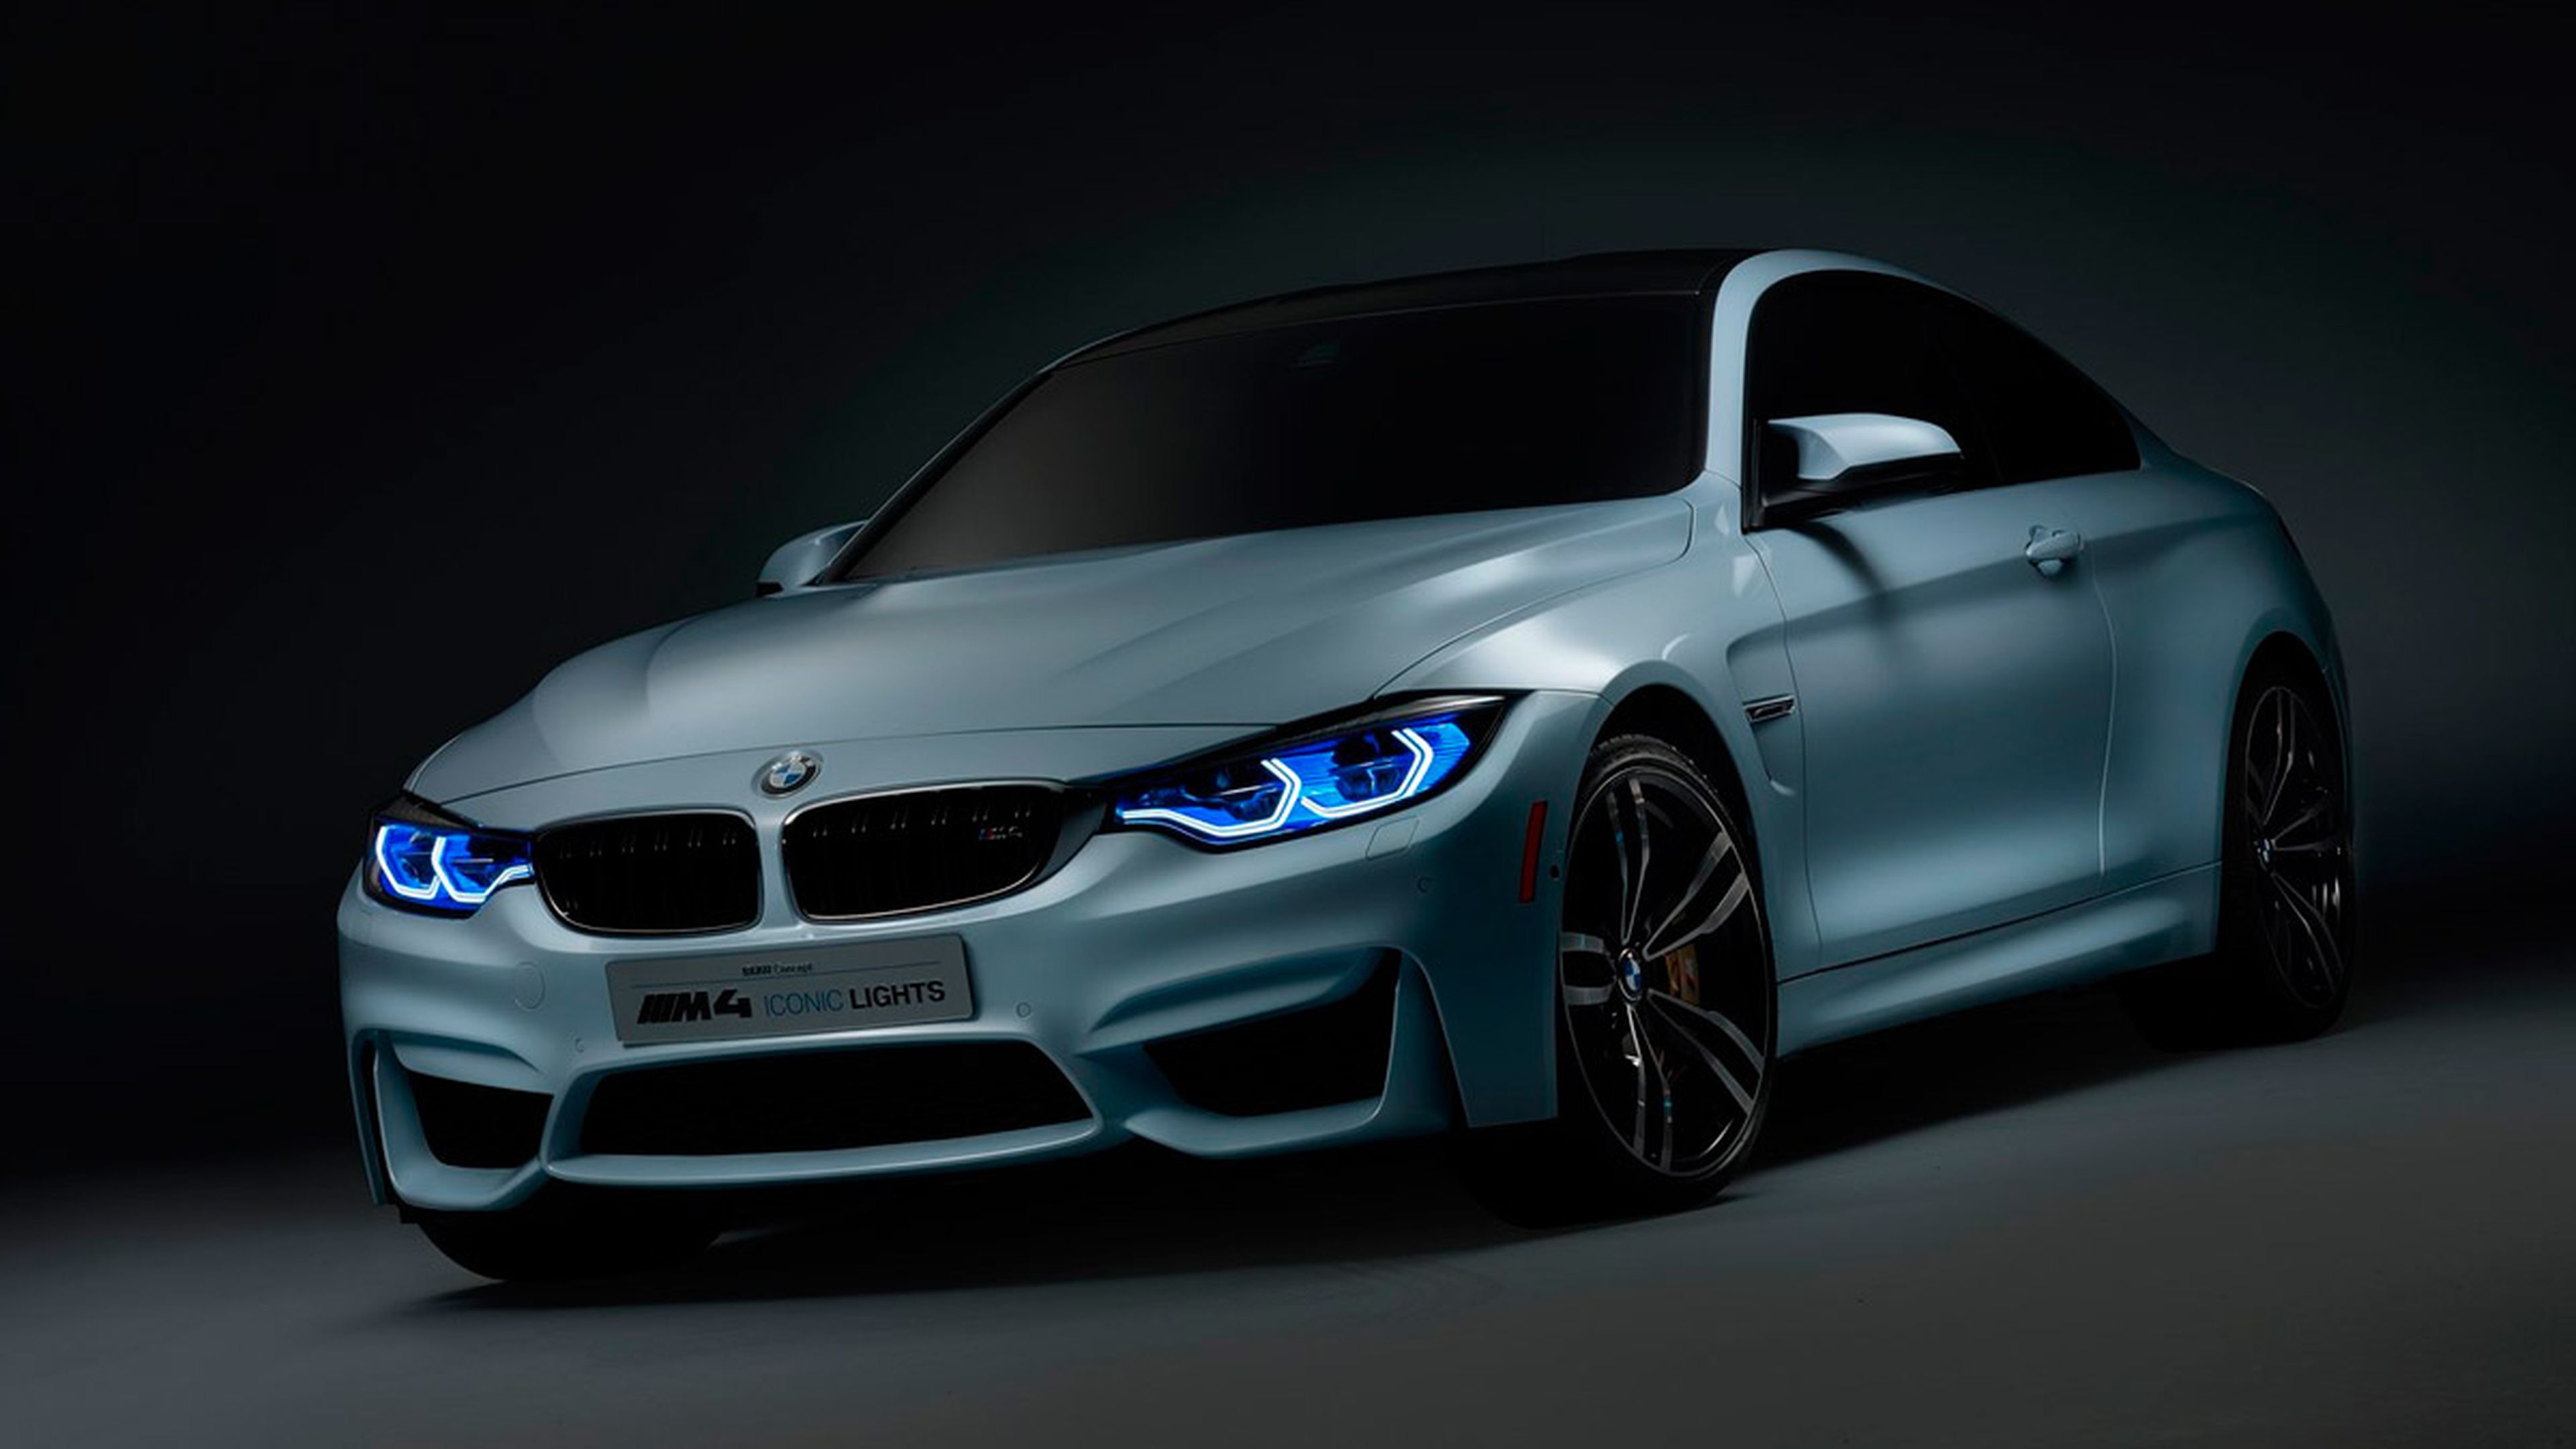 BMW M4 Iconic Lights Concept delantera